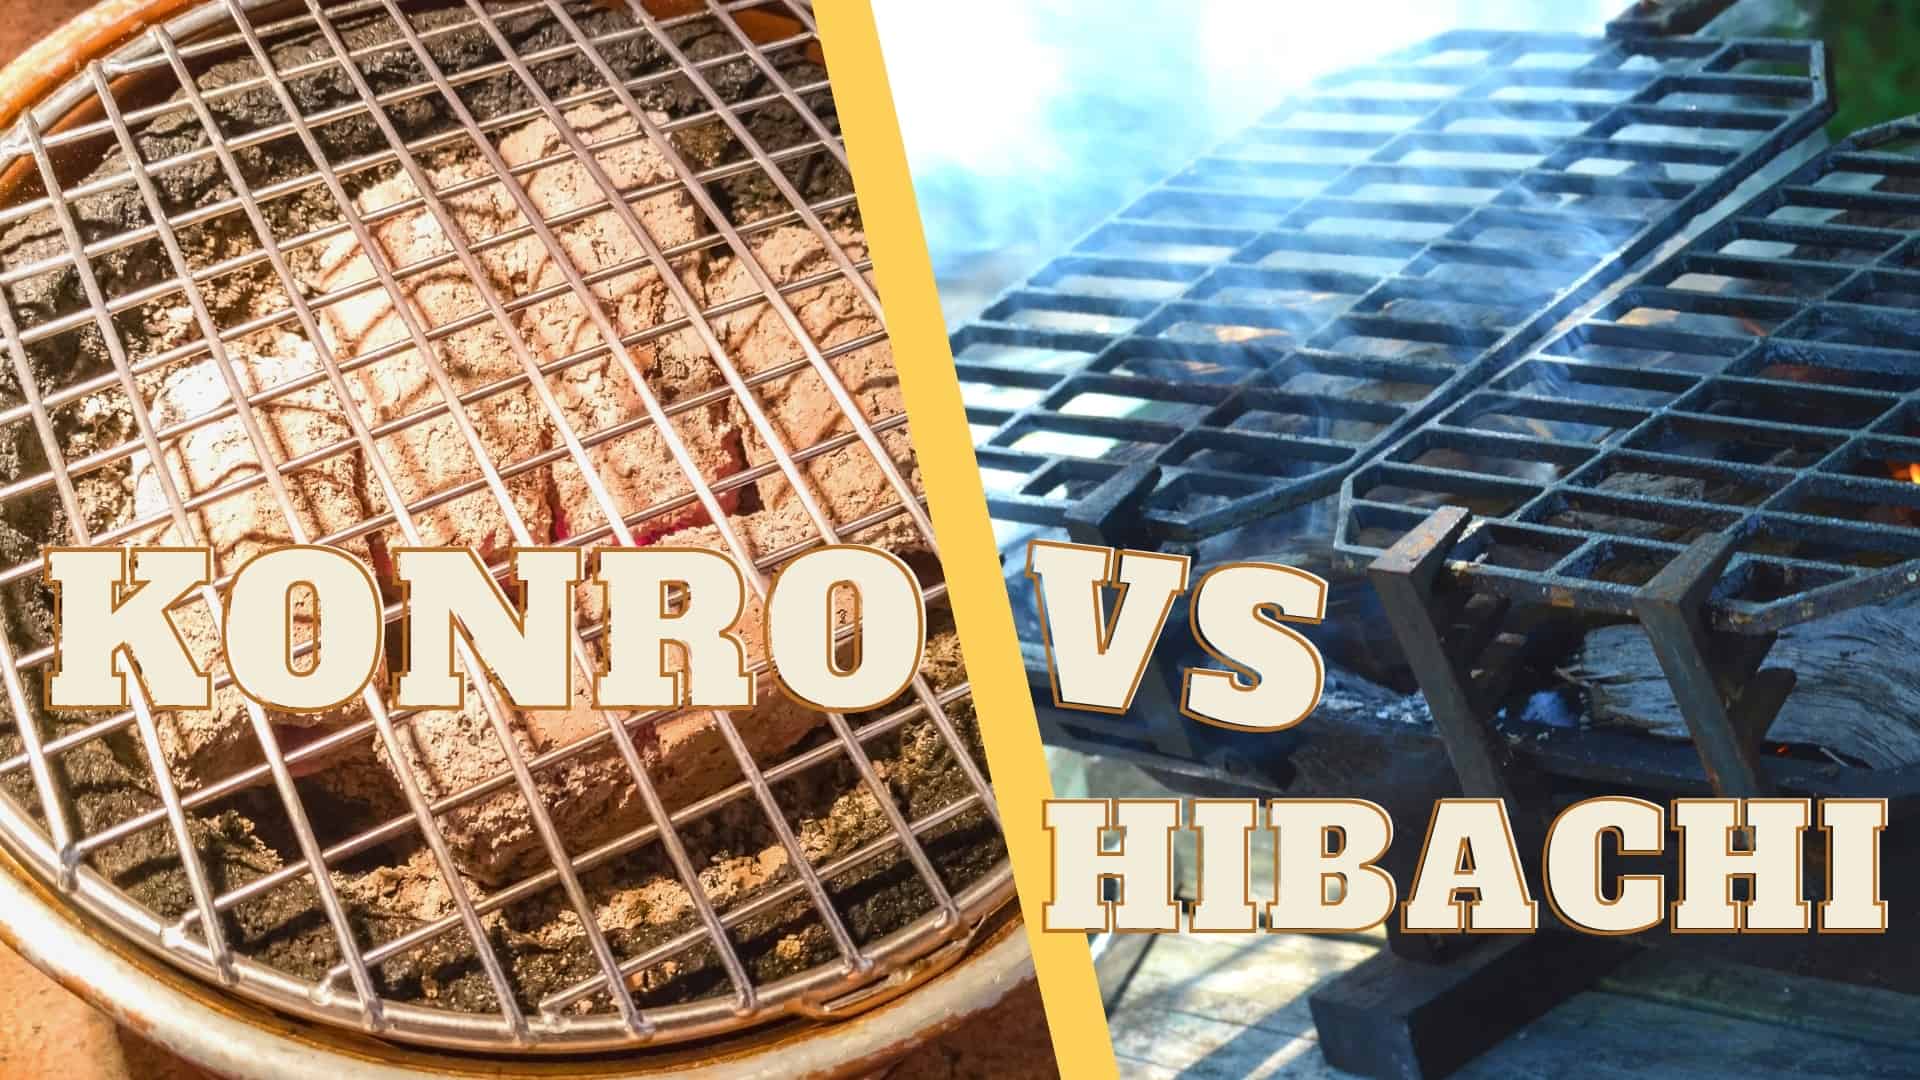 Konro vs Hibachi grills